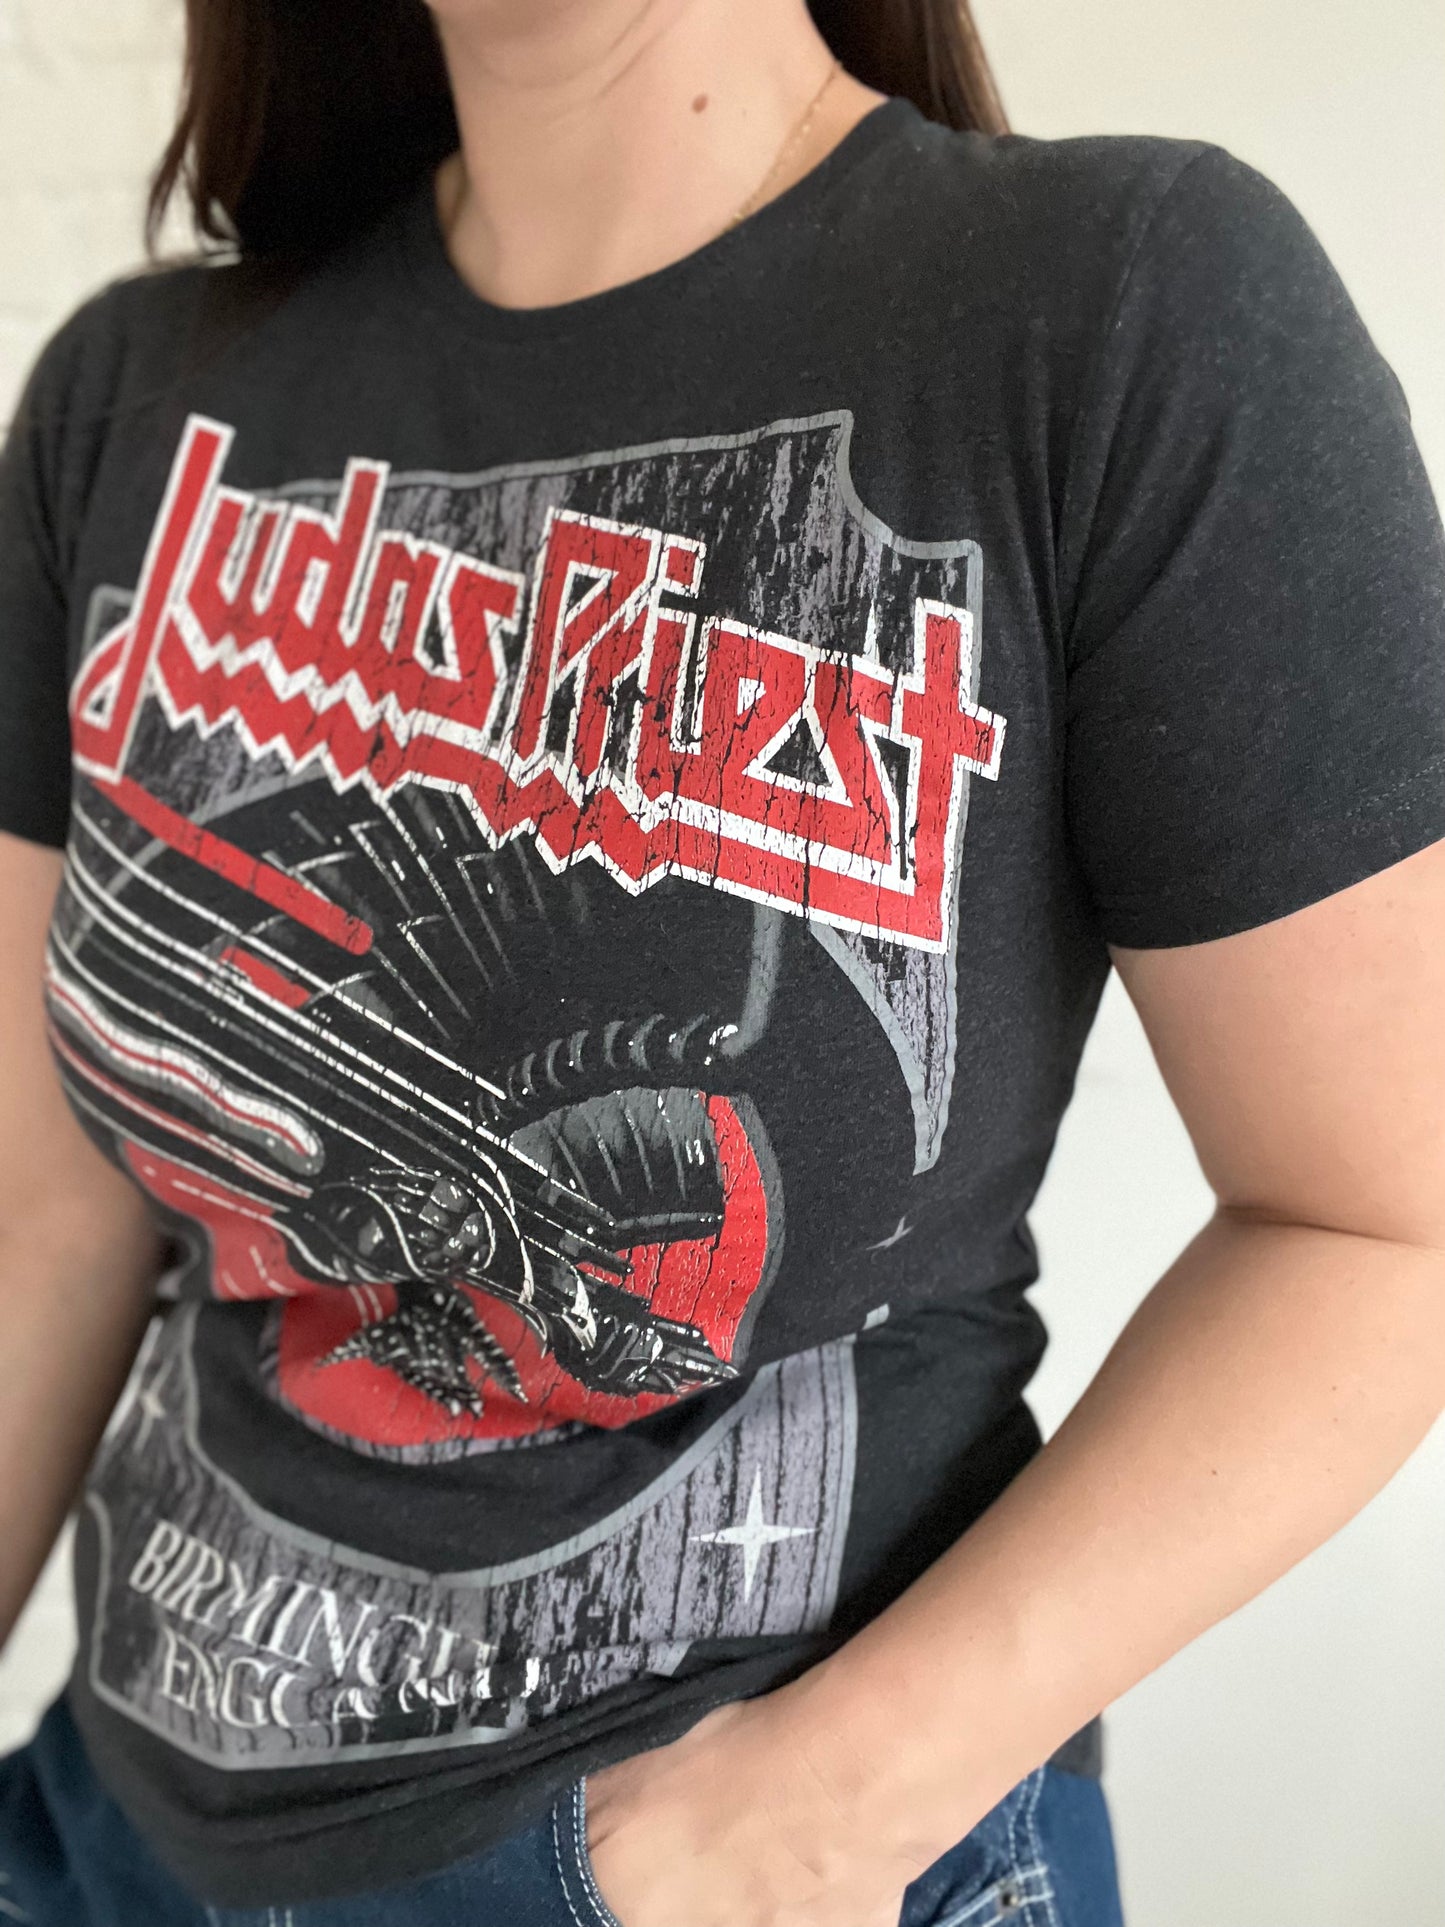 Judas Priest Birmingham England T-shirt - S